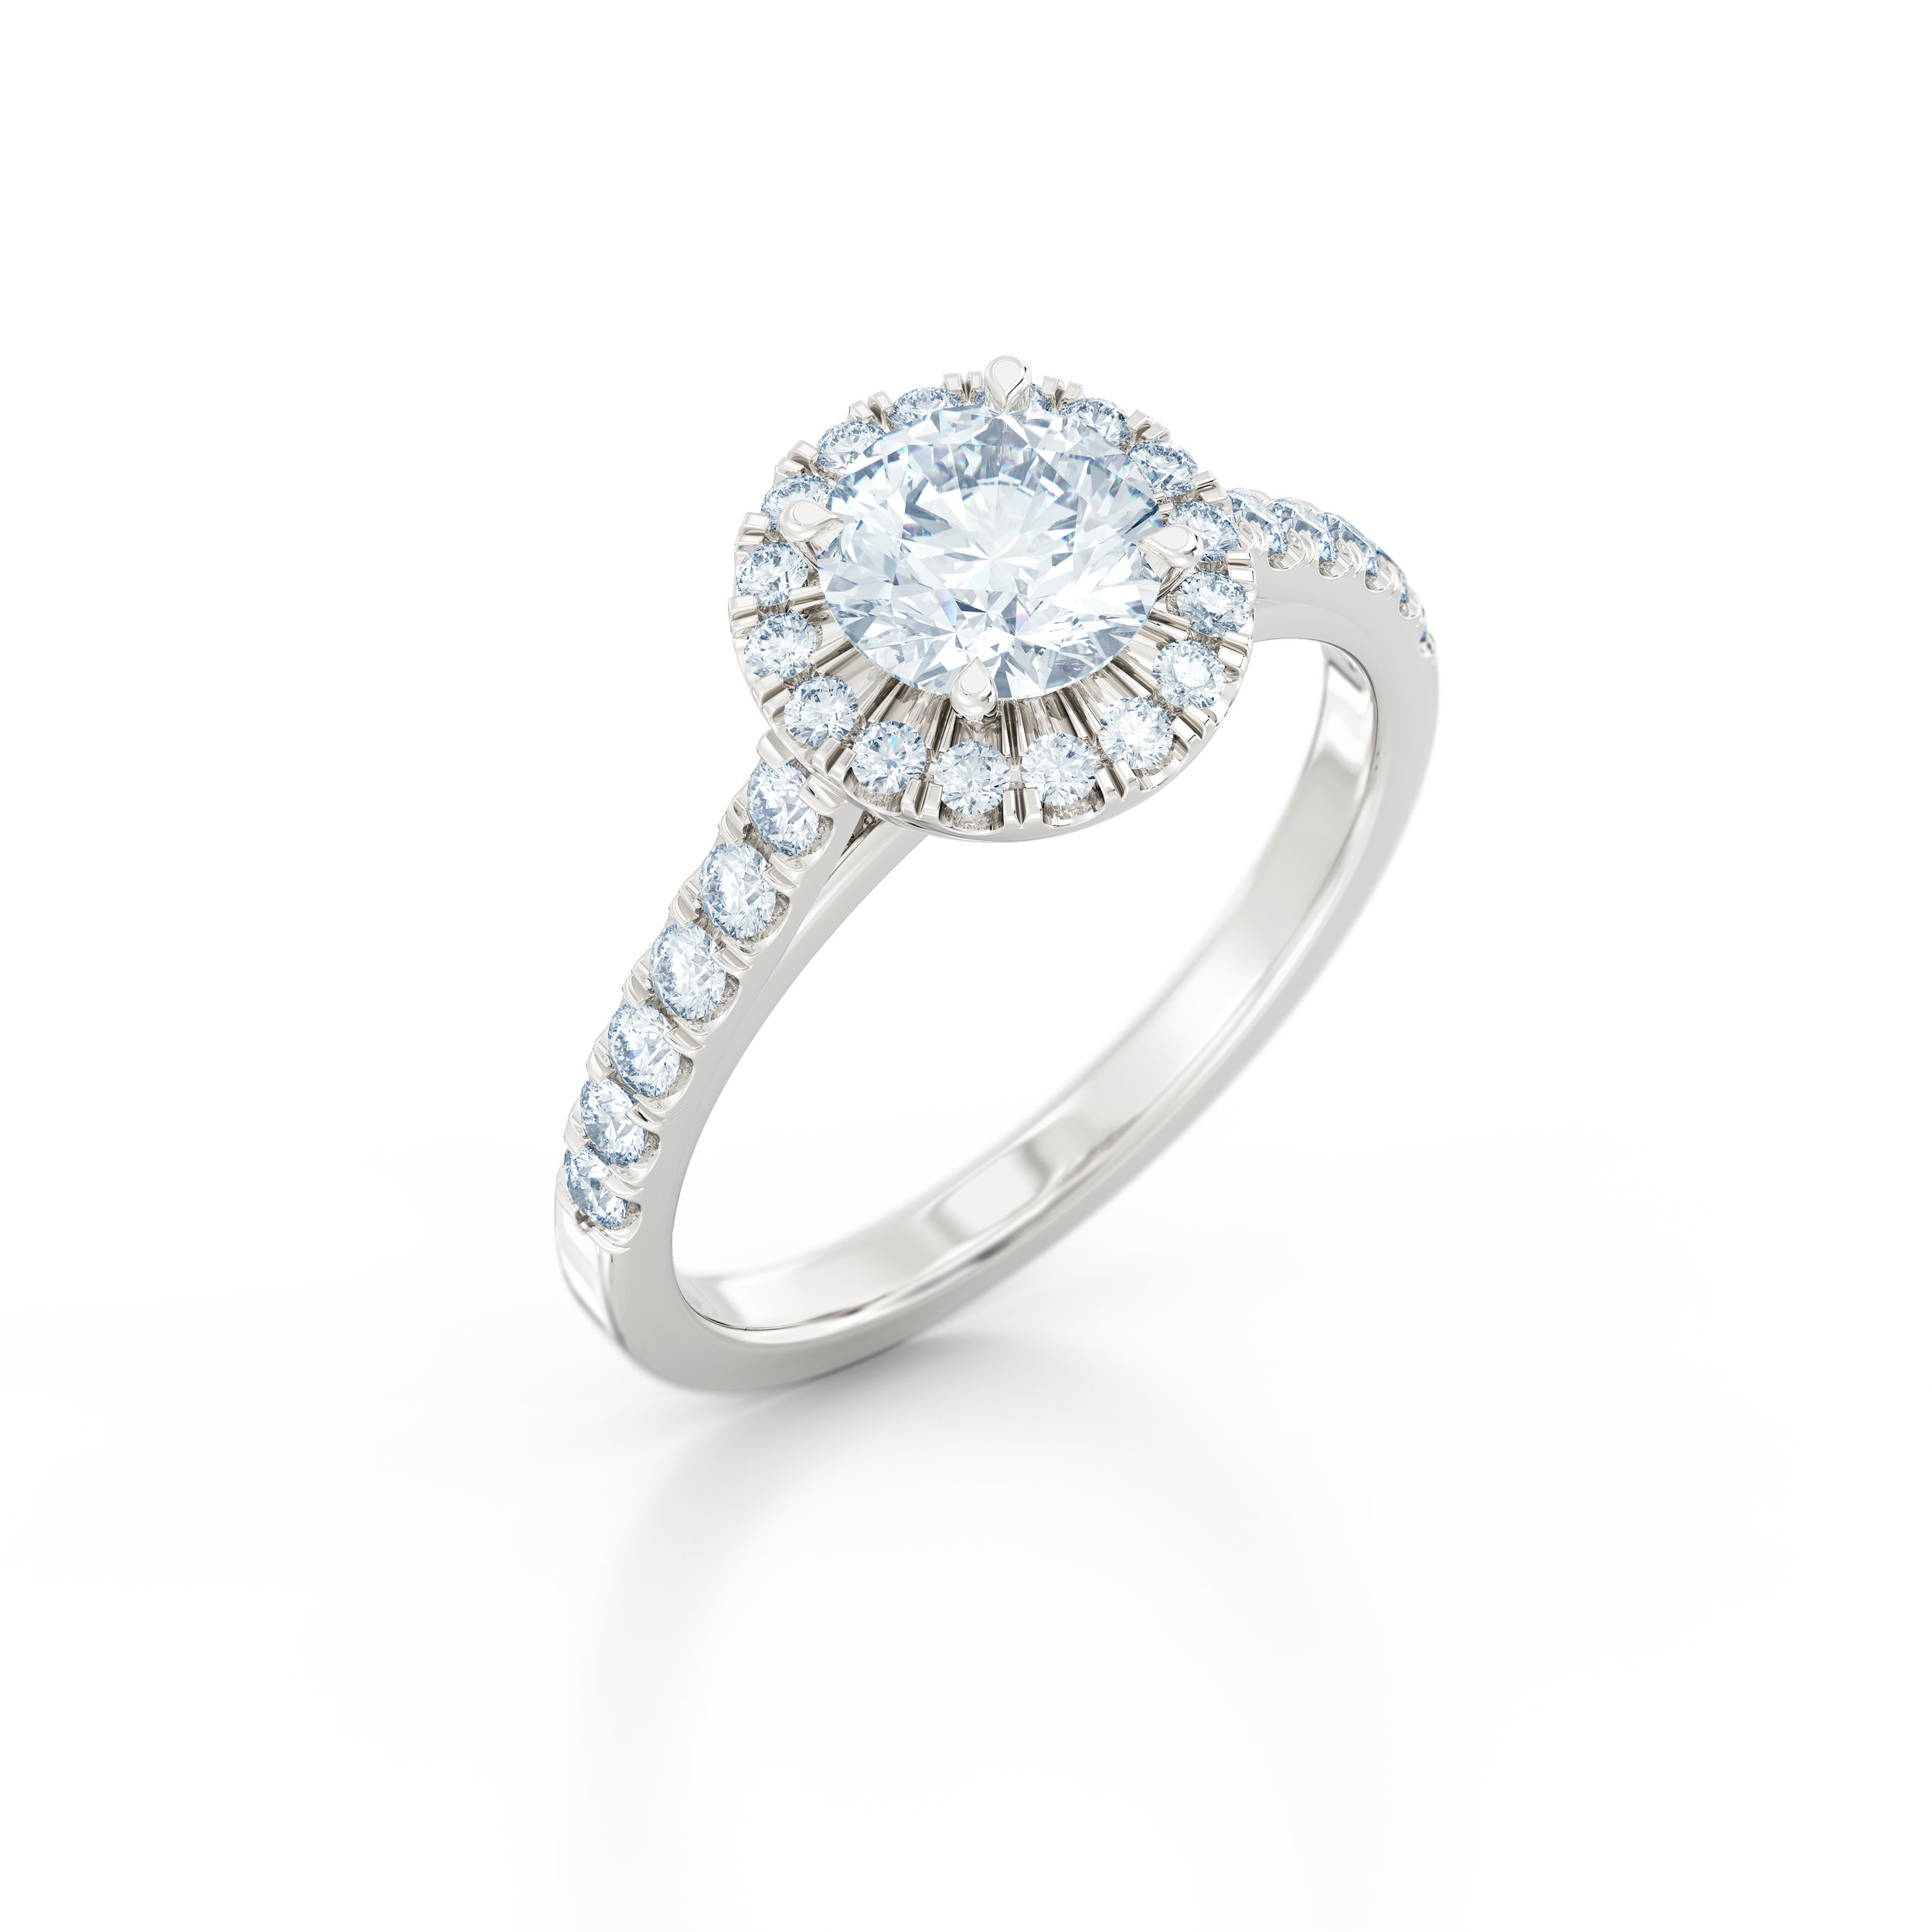 Brilliant cut diamond halo engagement ring